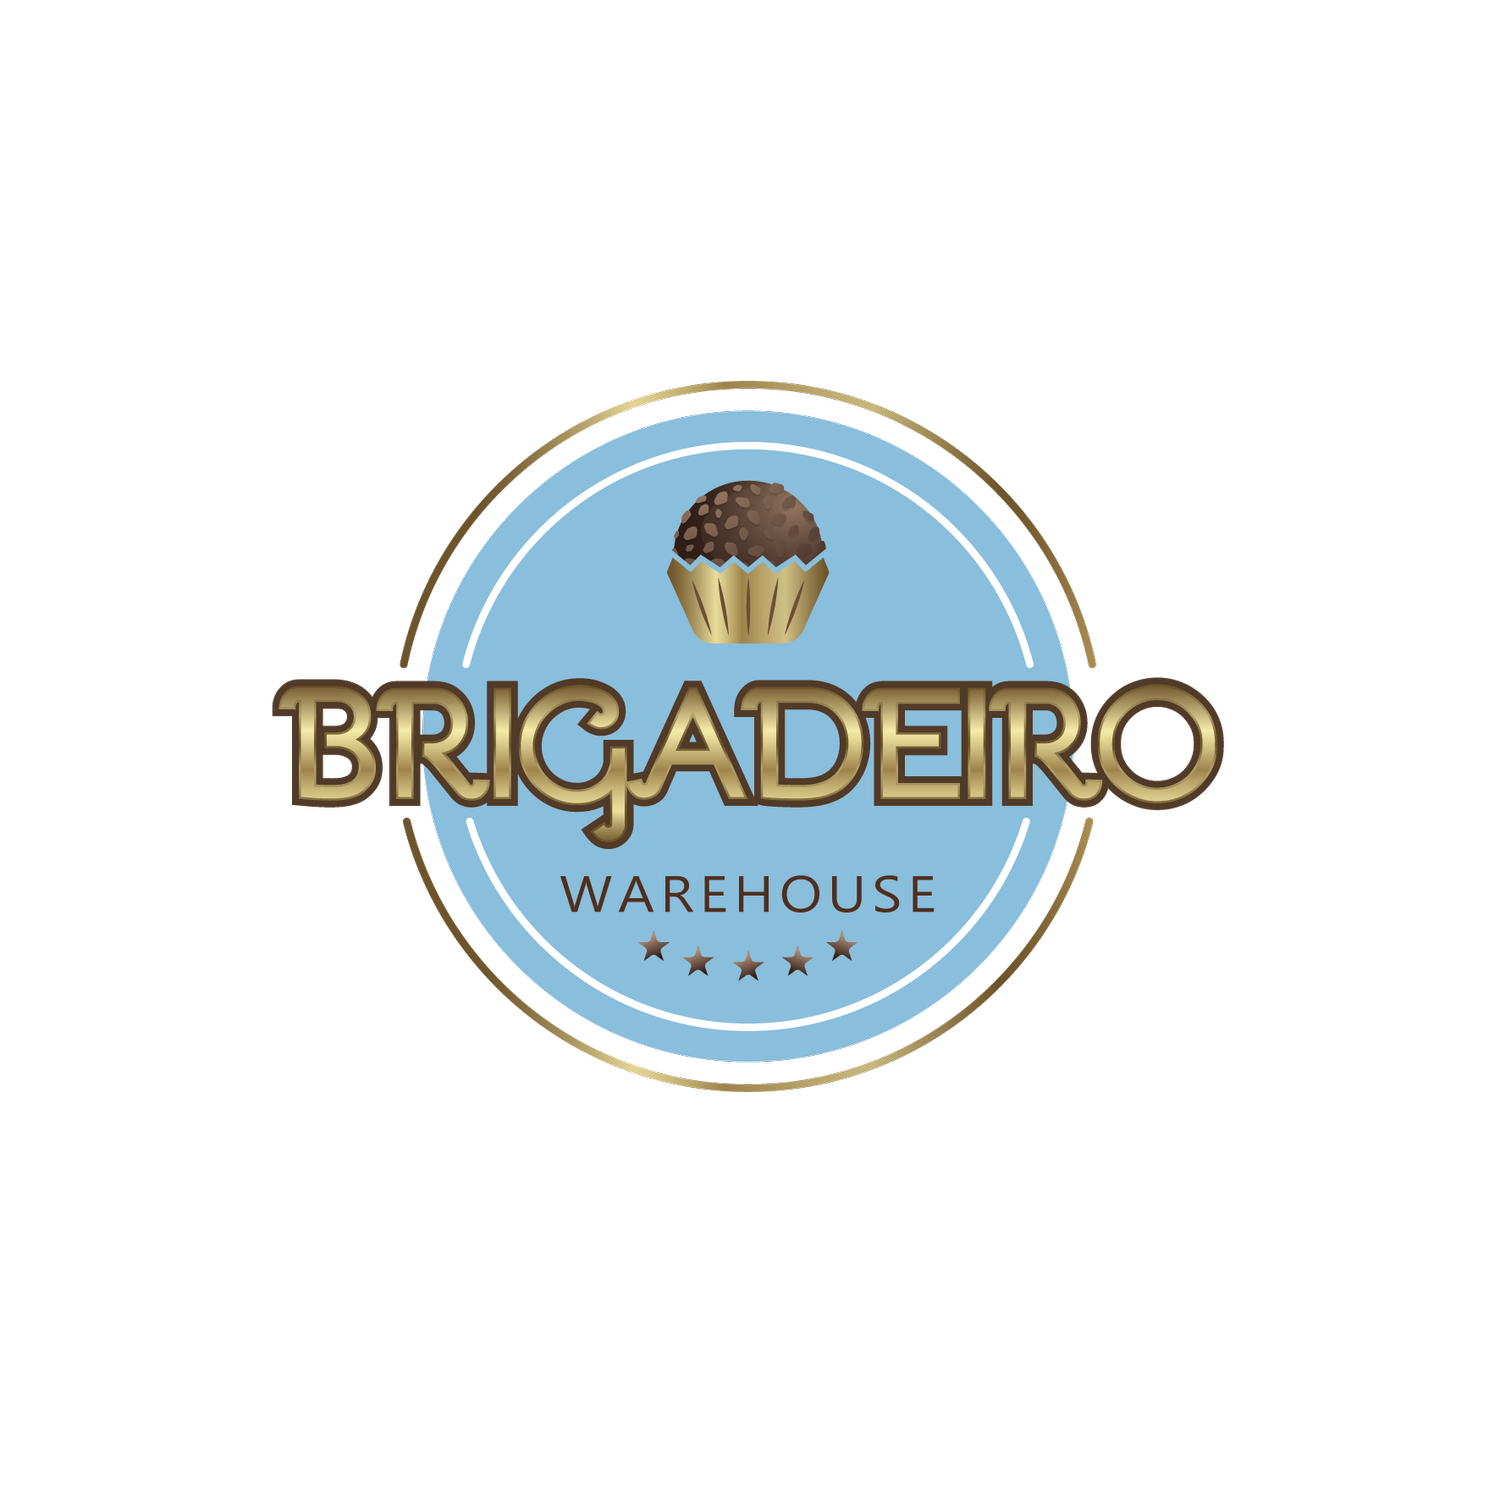 Brigadeiro Warehouse